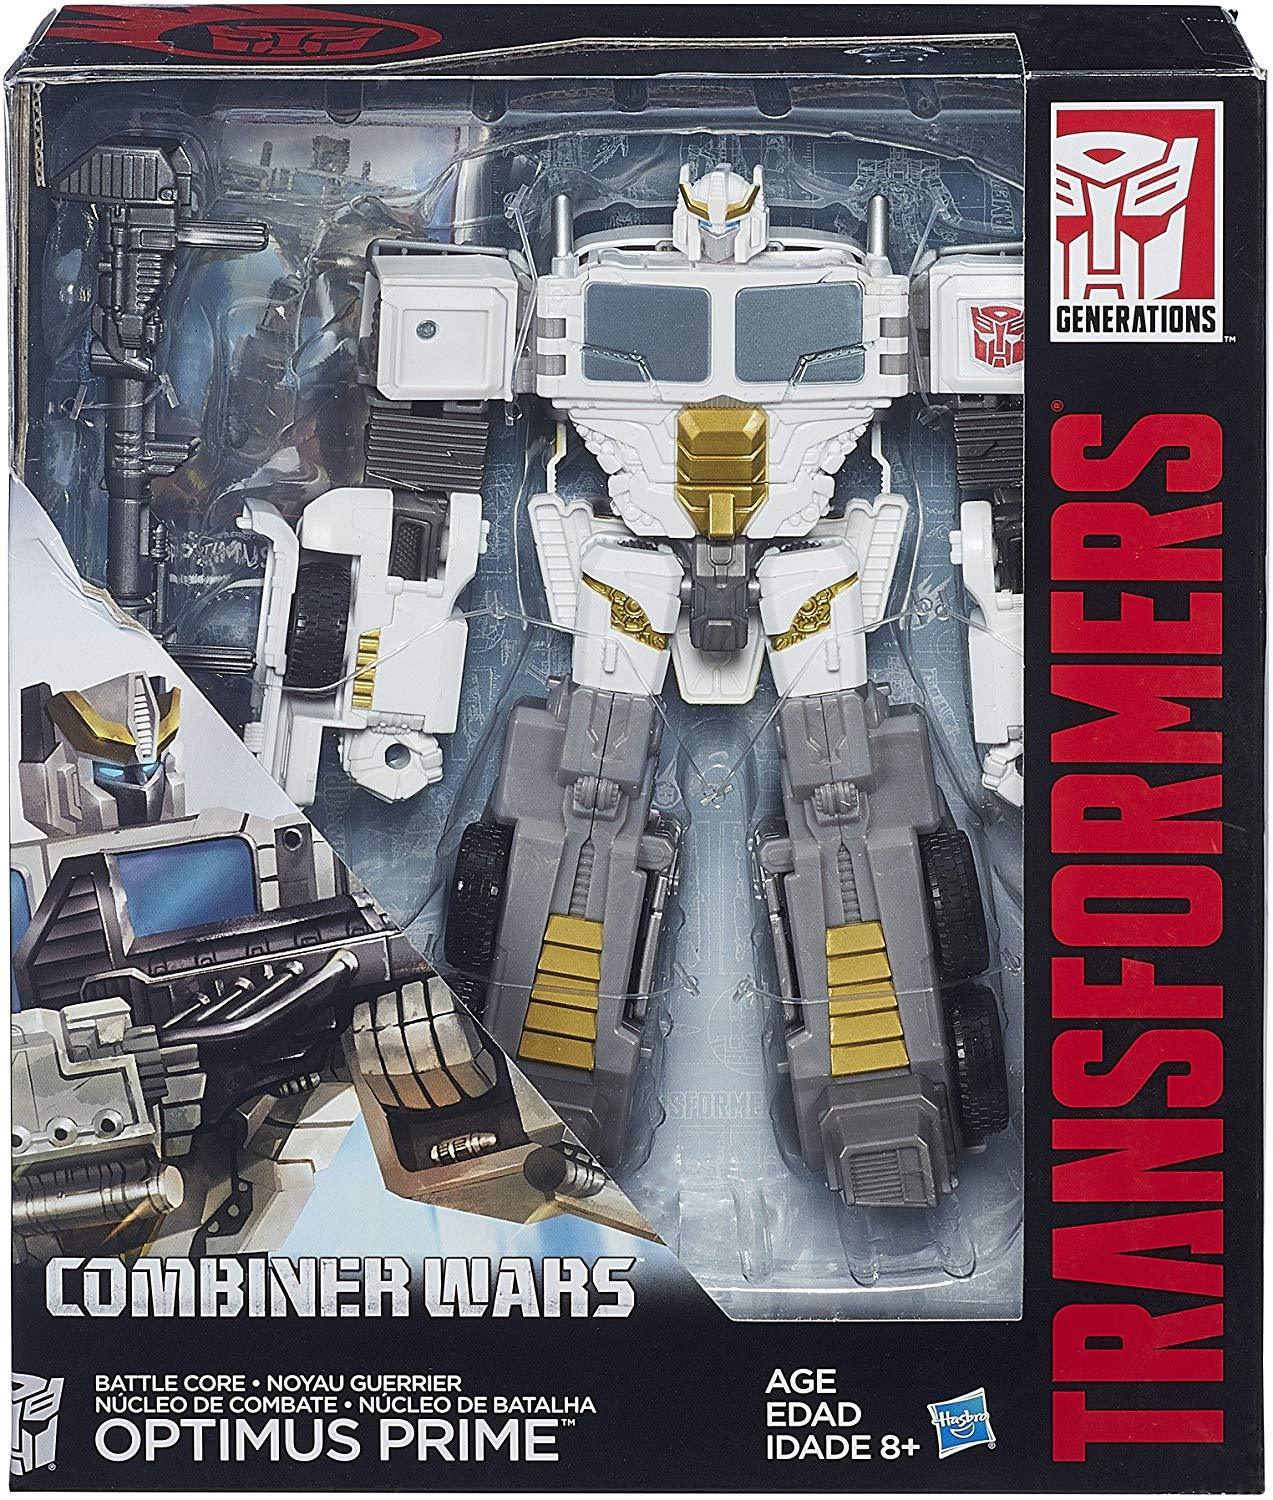 Transformers Generations Combiner Wars Voyager Class Battle Core Optimus Prime Action Figure 1